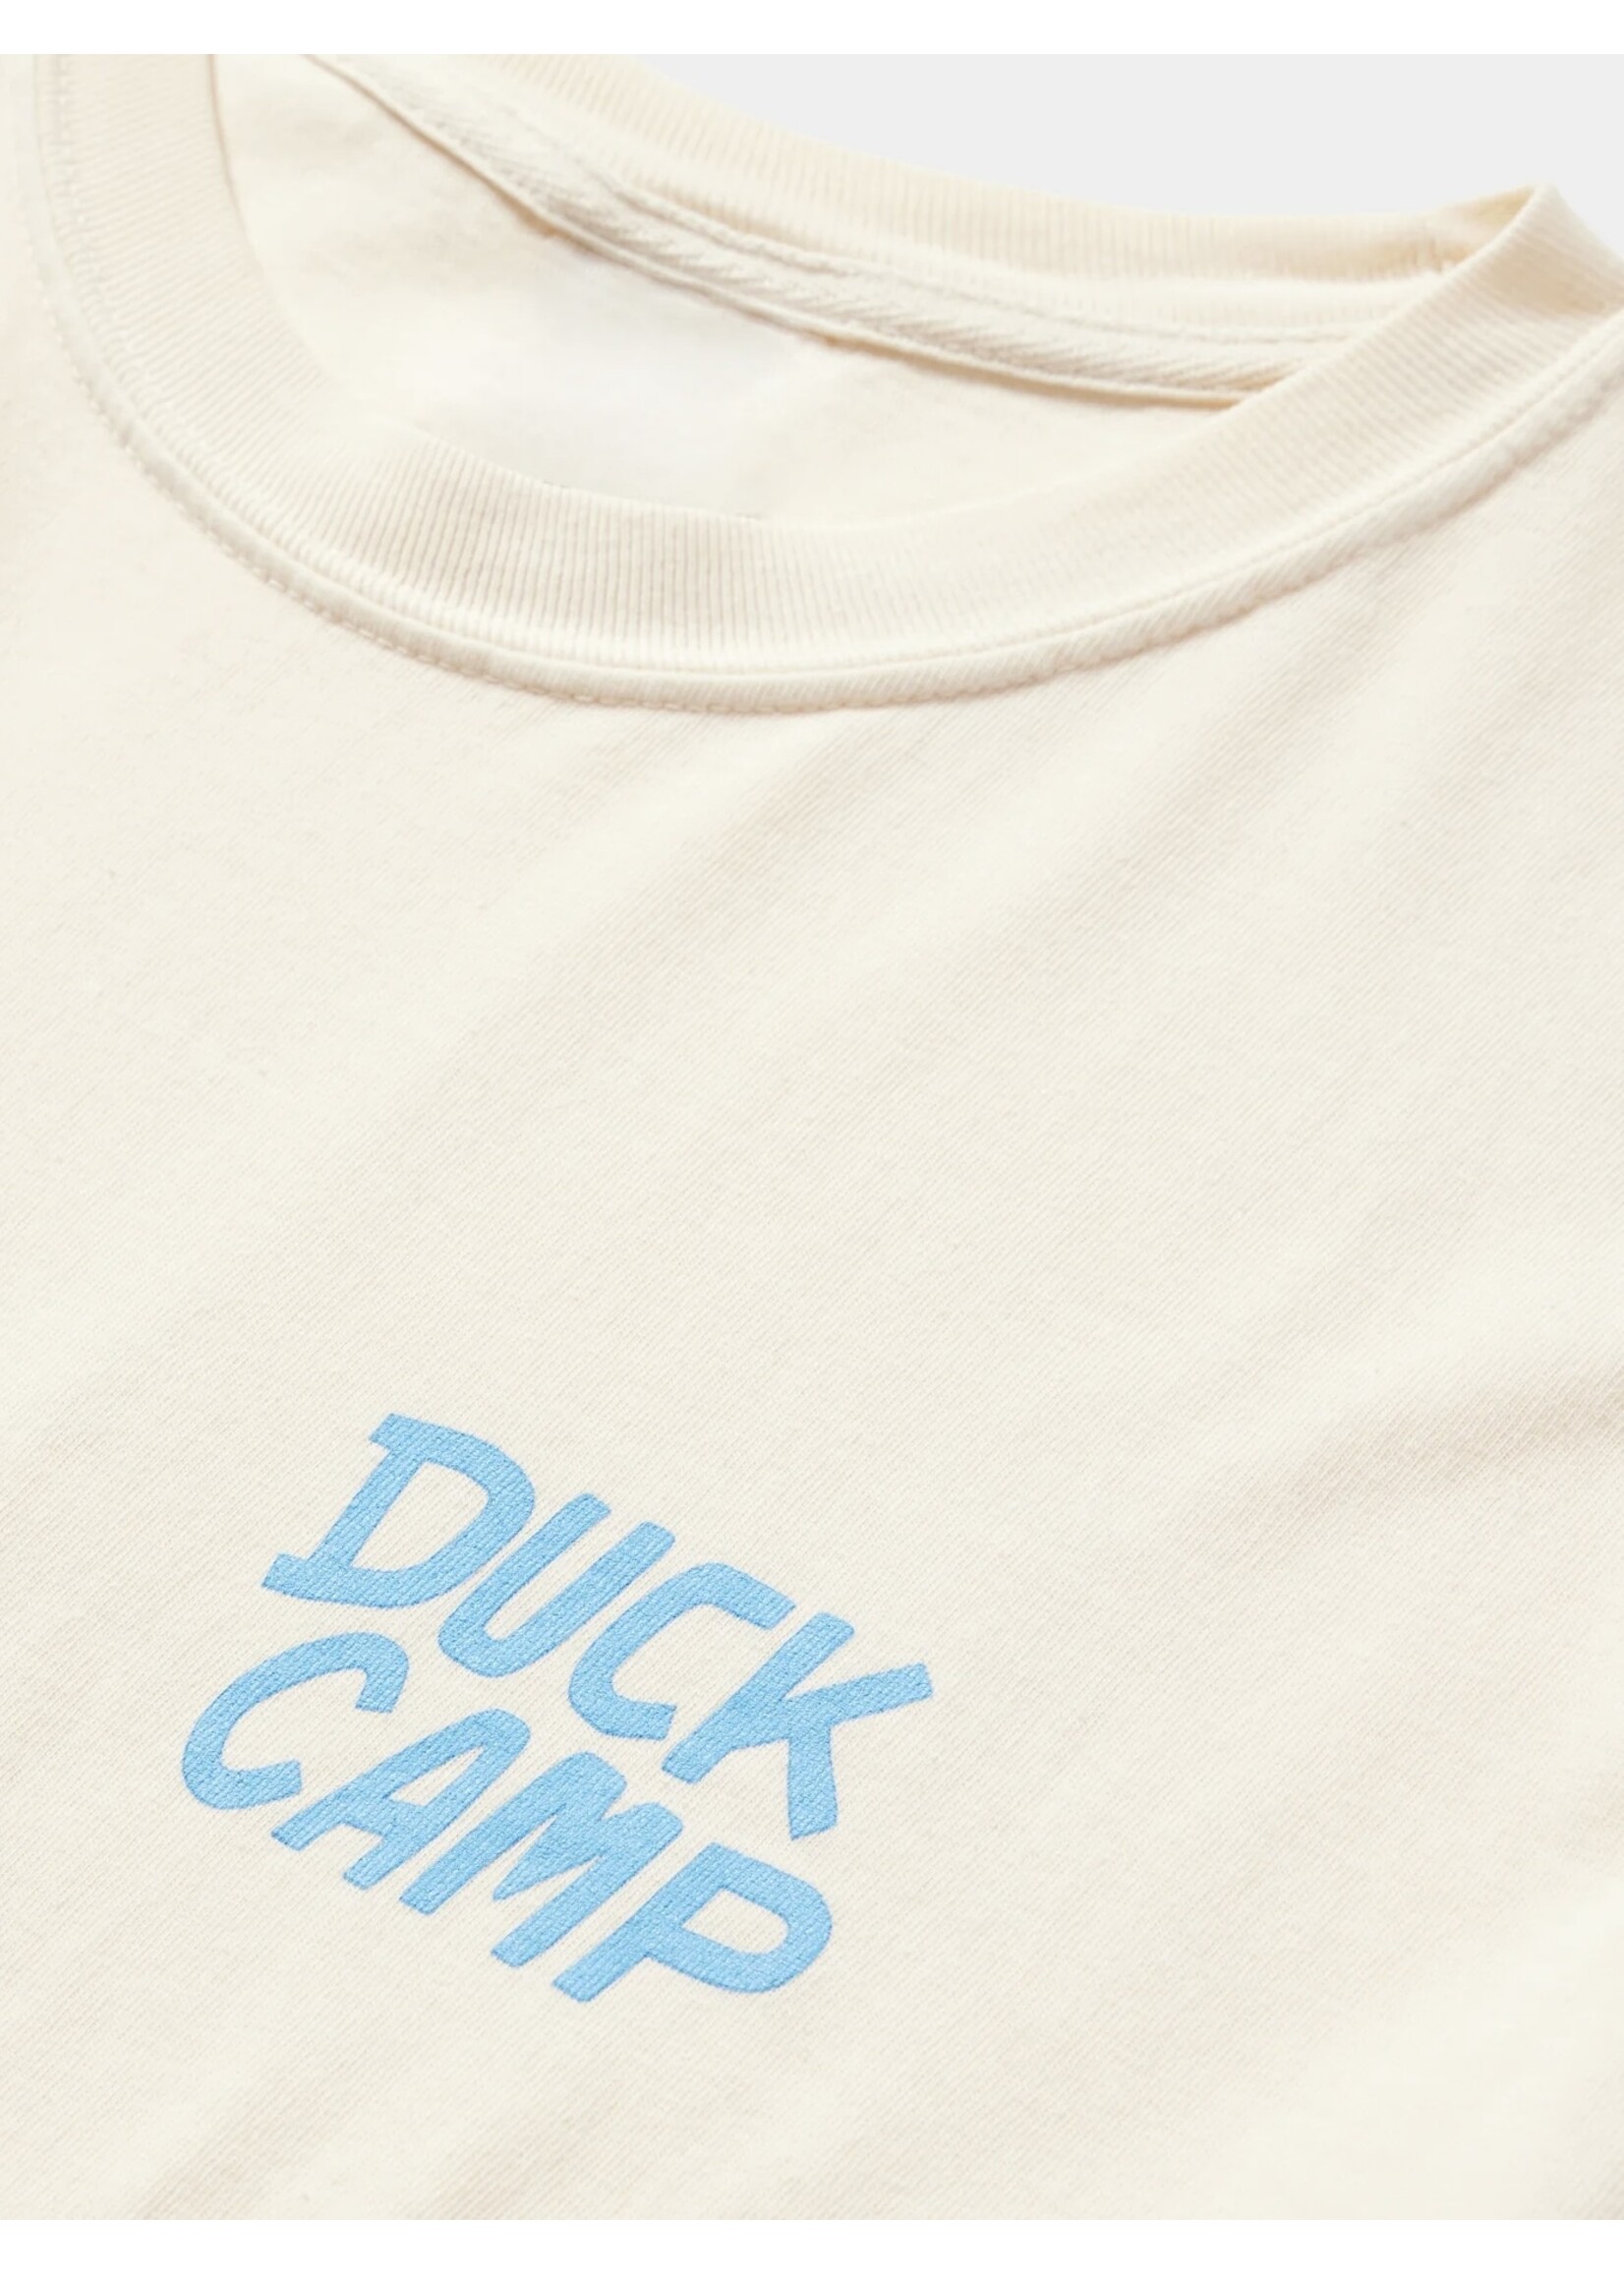 Duck Camp Graphic Tee Tri Tarpon Ivory